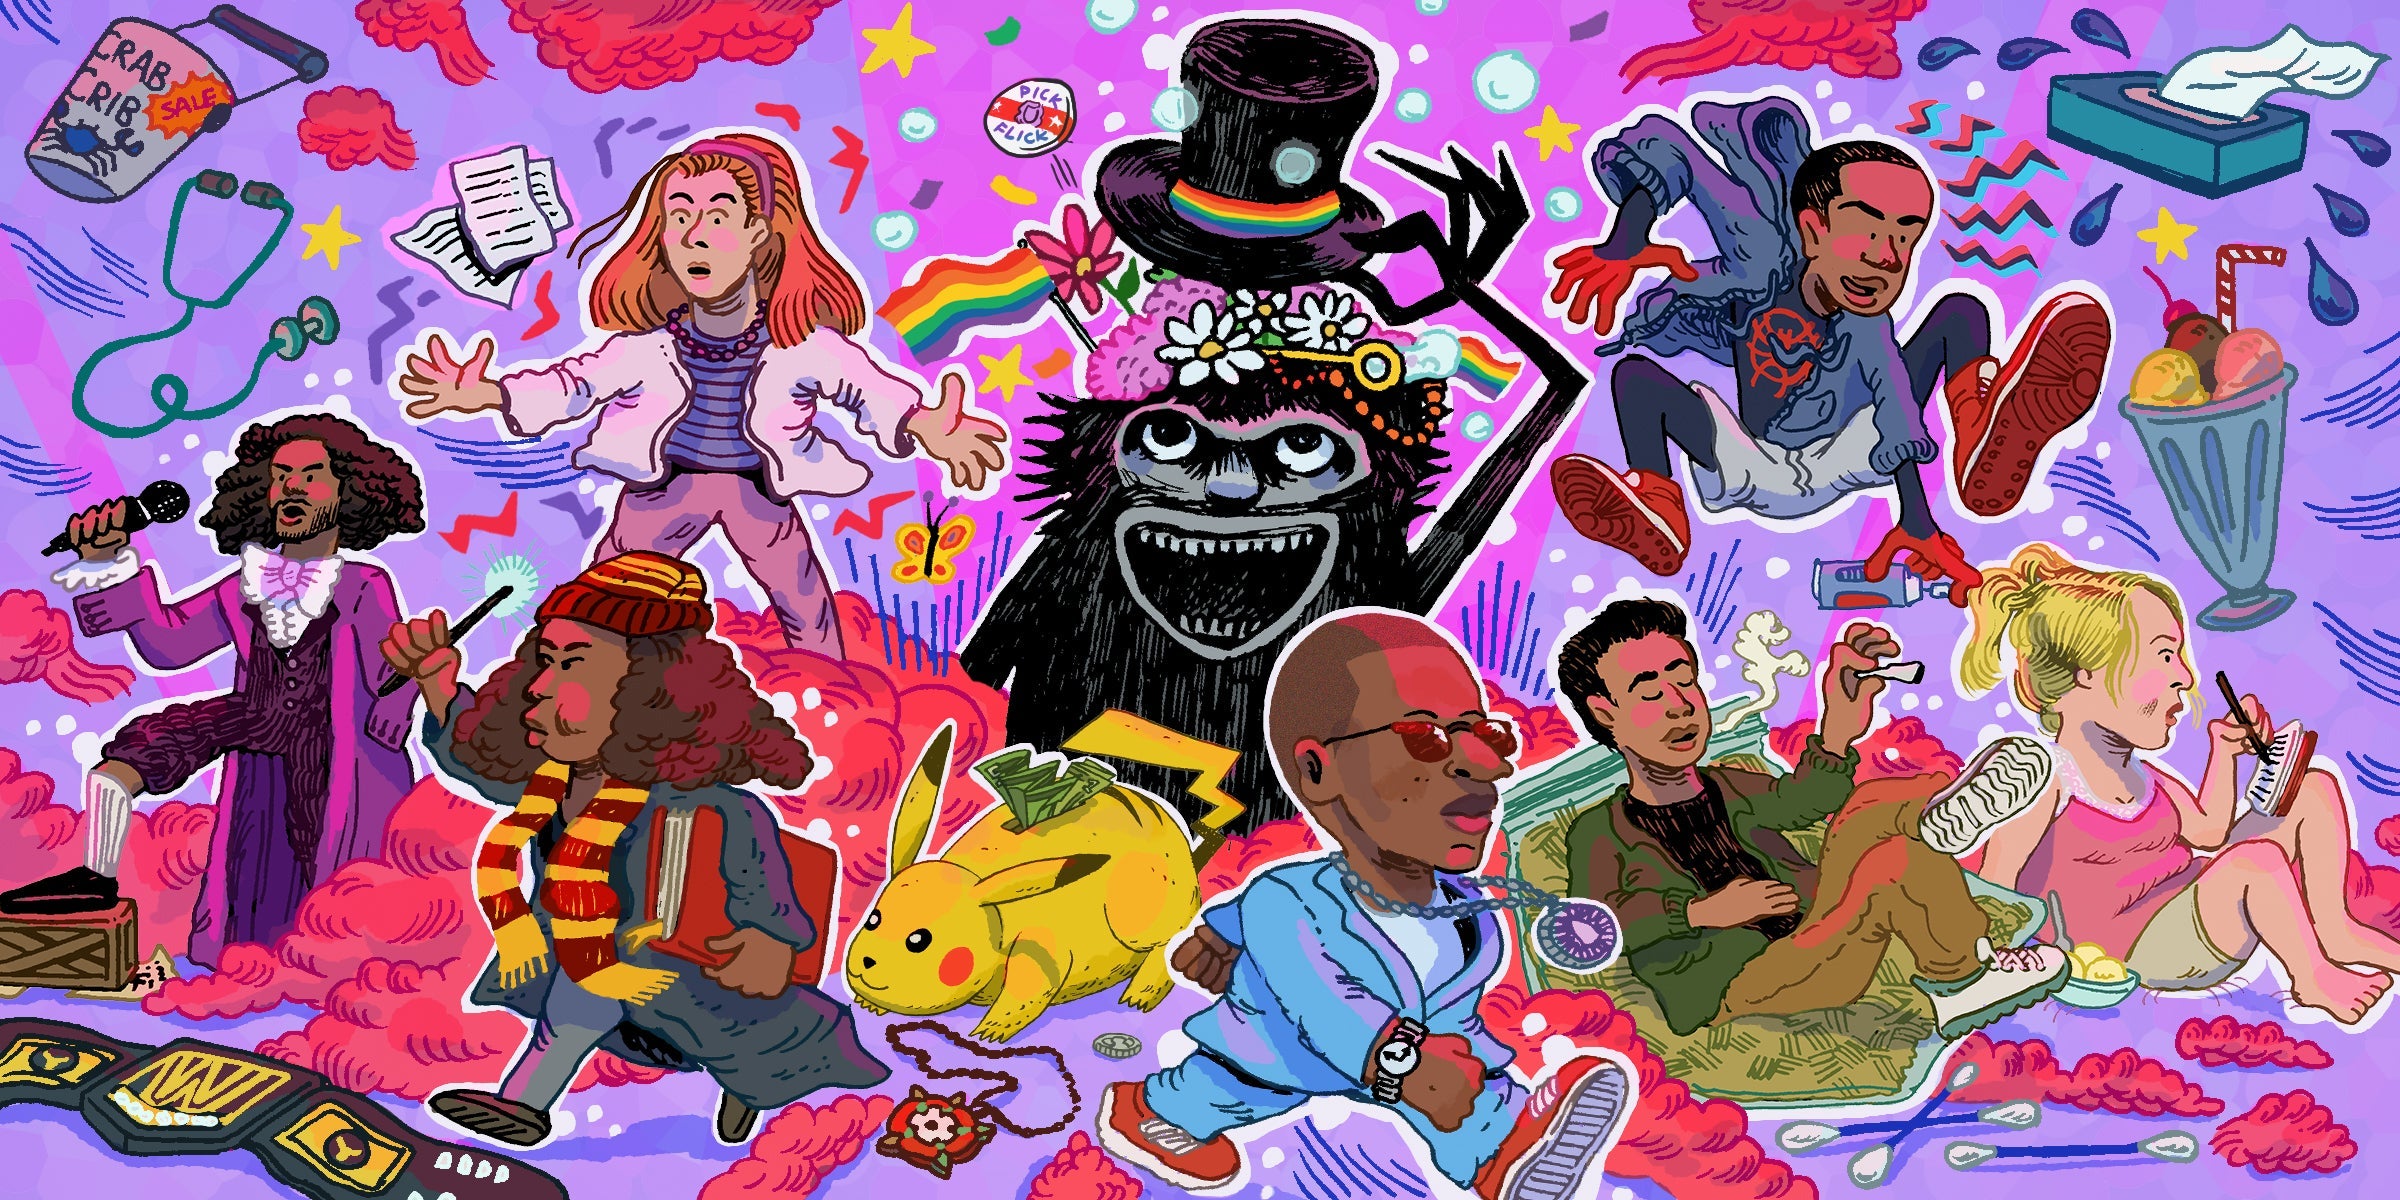 Splash panel featuring Thomas Jefferson, Willow, Hermione, Pikachu, the Babadook, Jay-Z, Miles Morales, Kumar, and Bridget Jones.